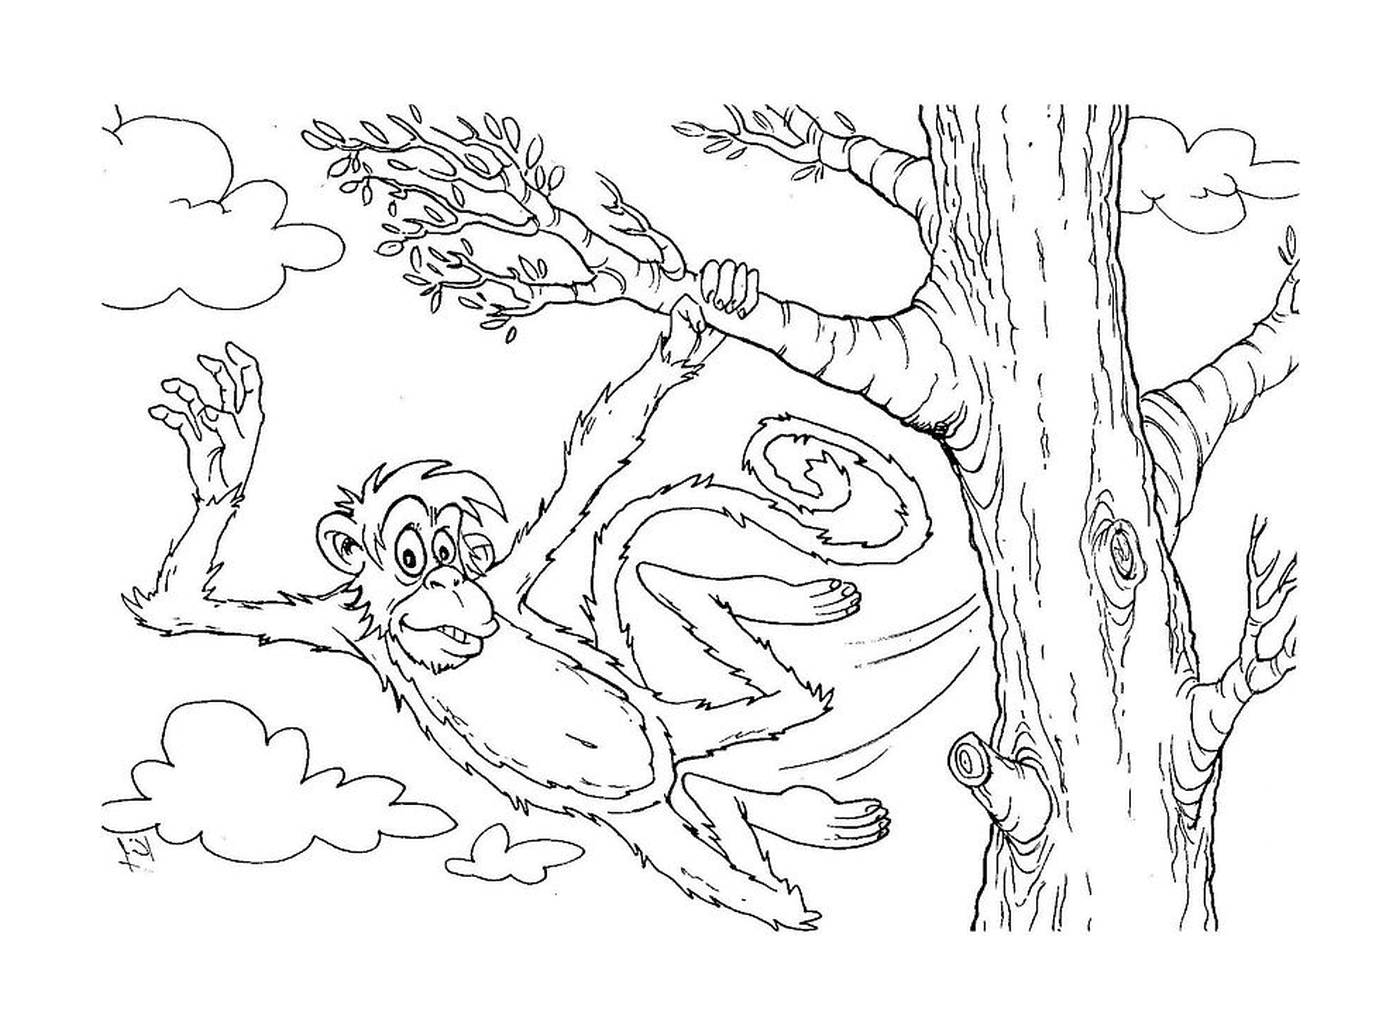   Un singe suspendu à un arbre 